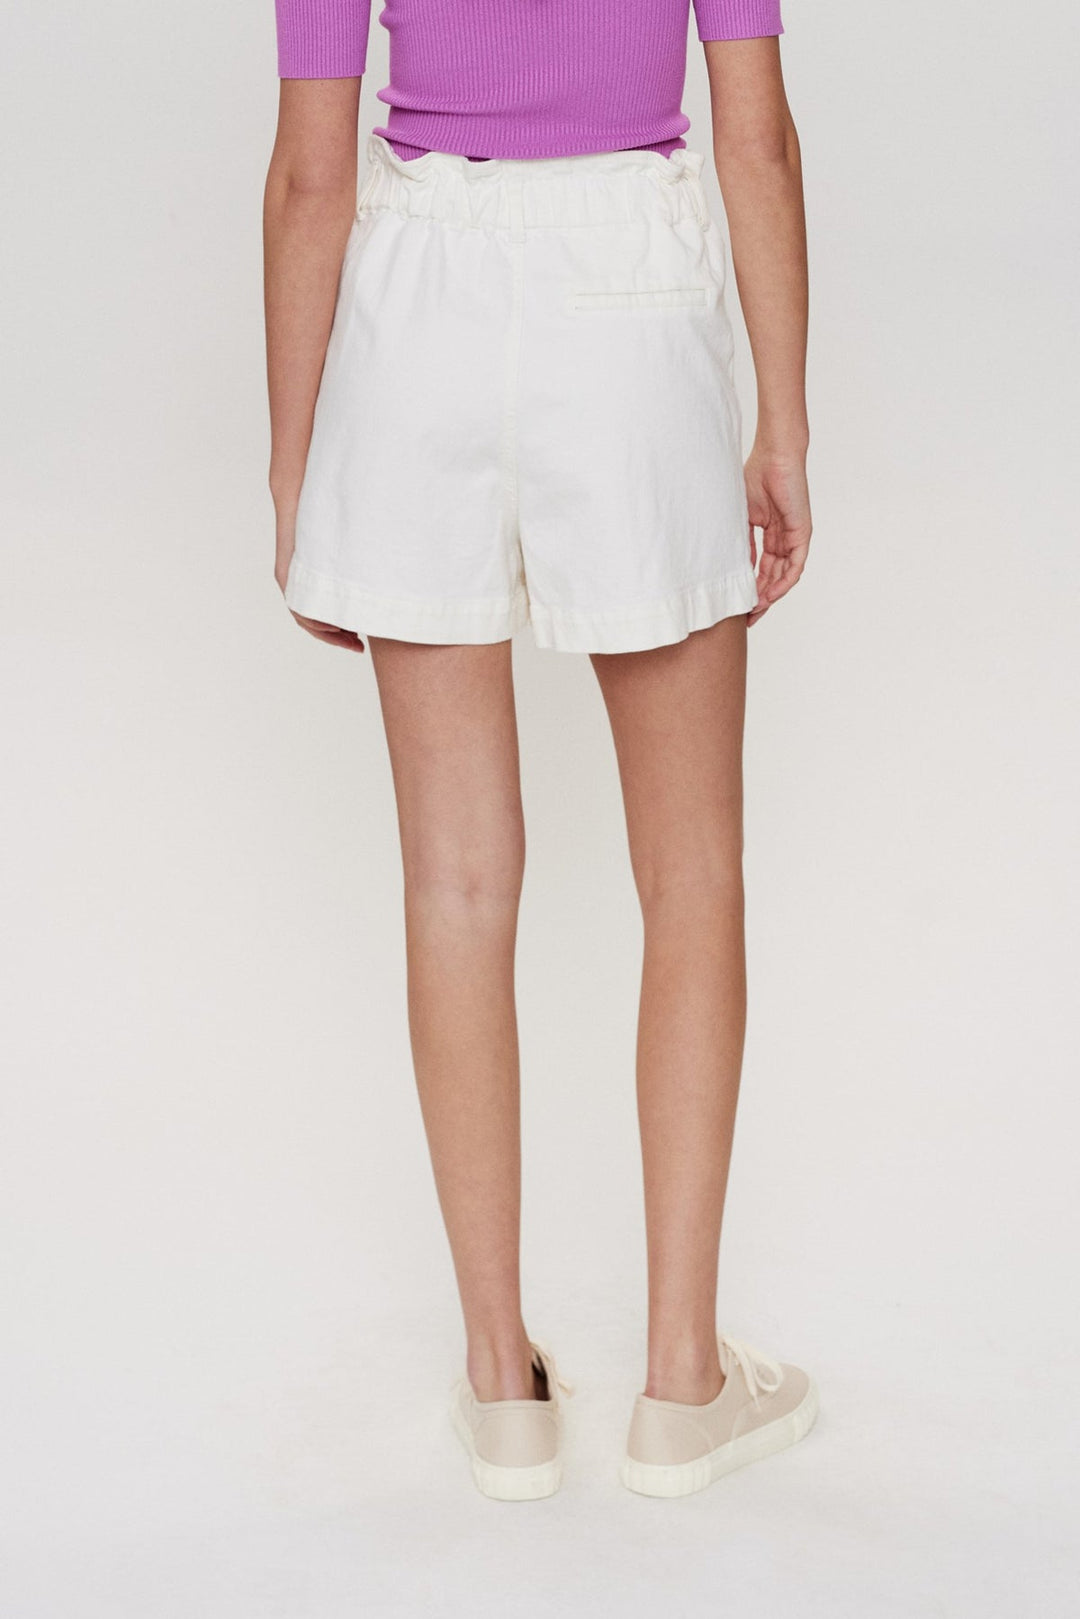 Numph Nululu Bright White Shorts